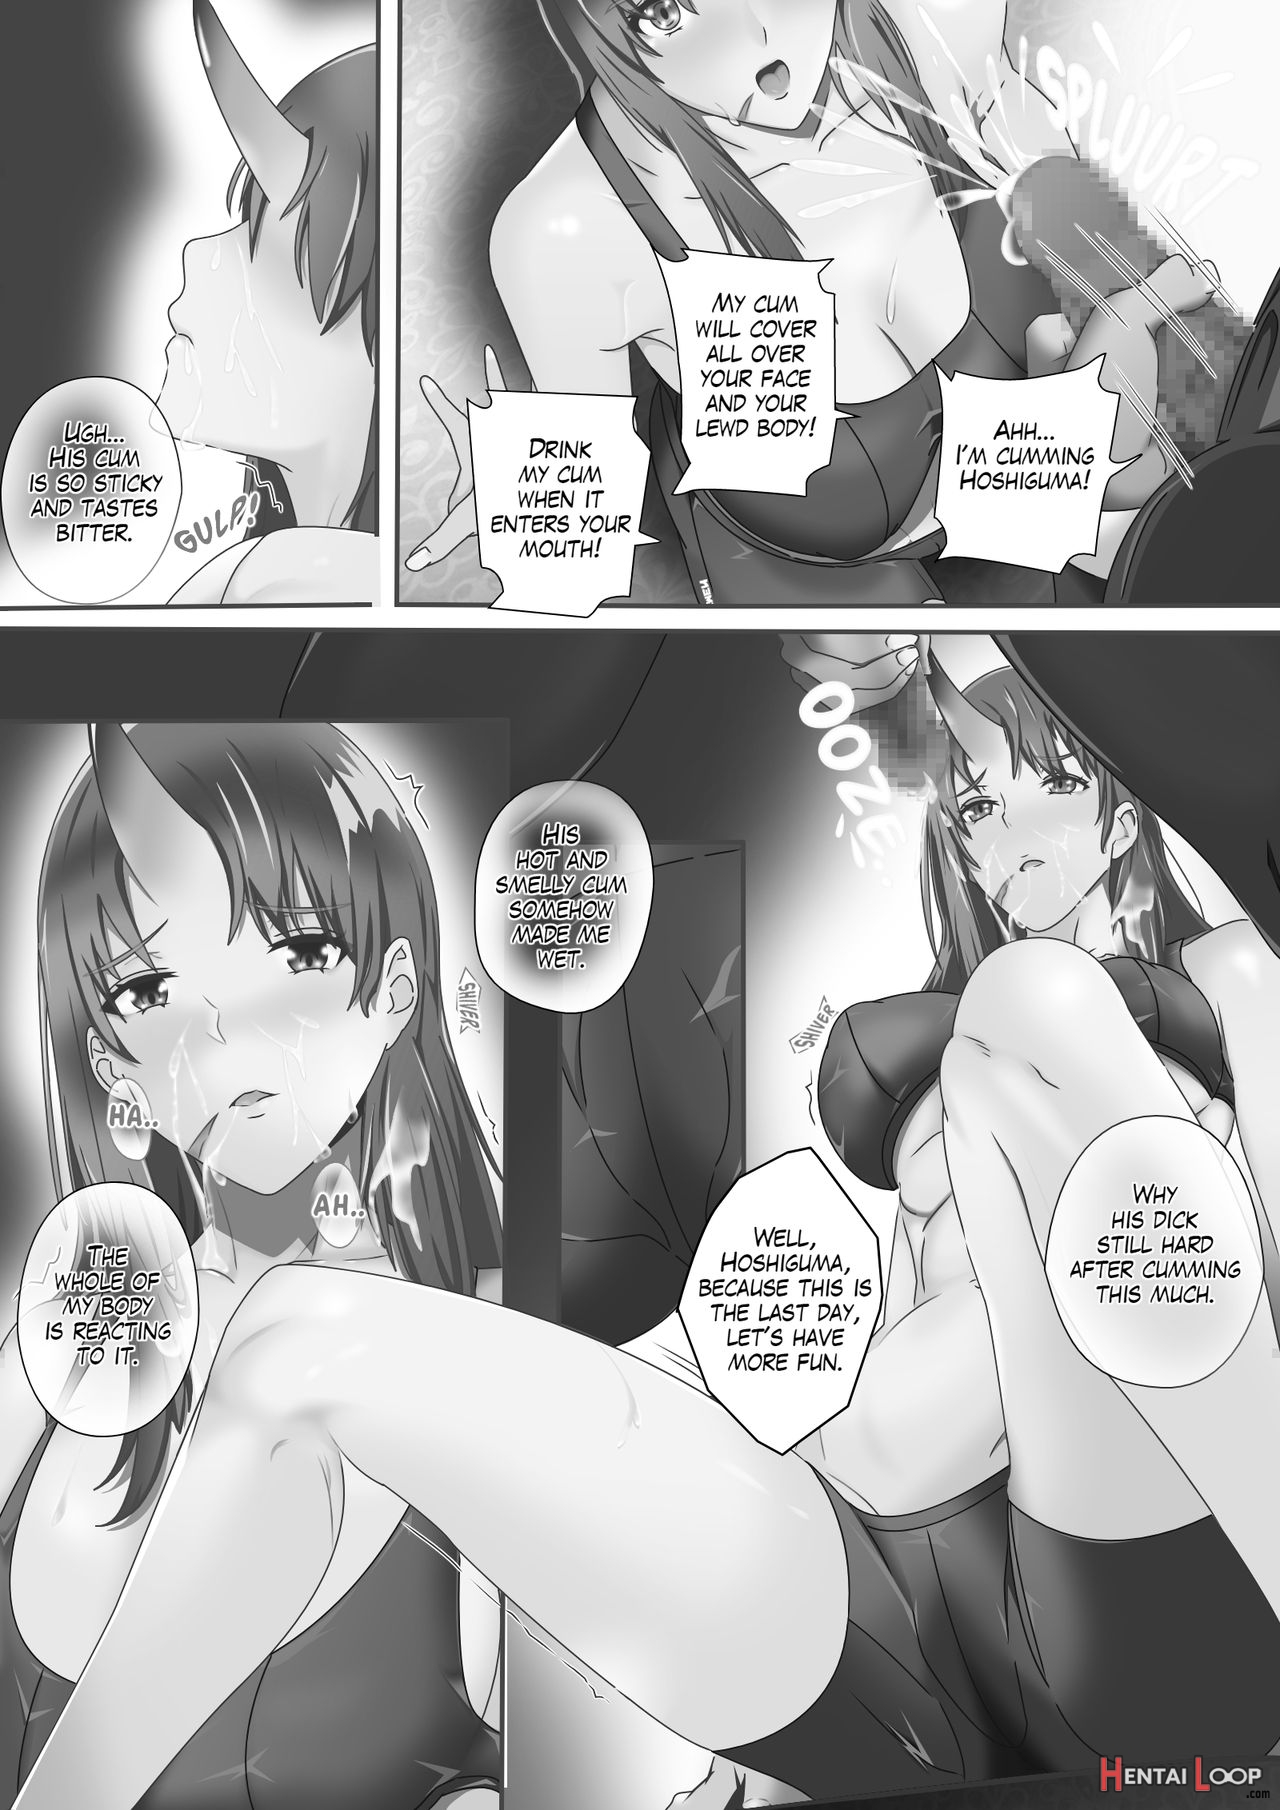 Hoshiguma's Secret Contract page 3